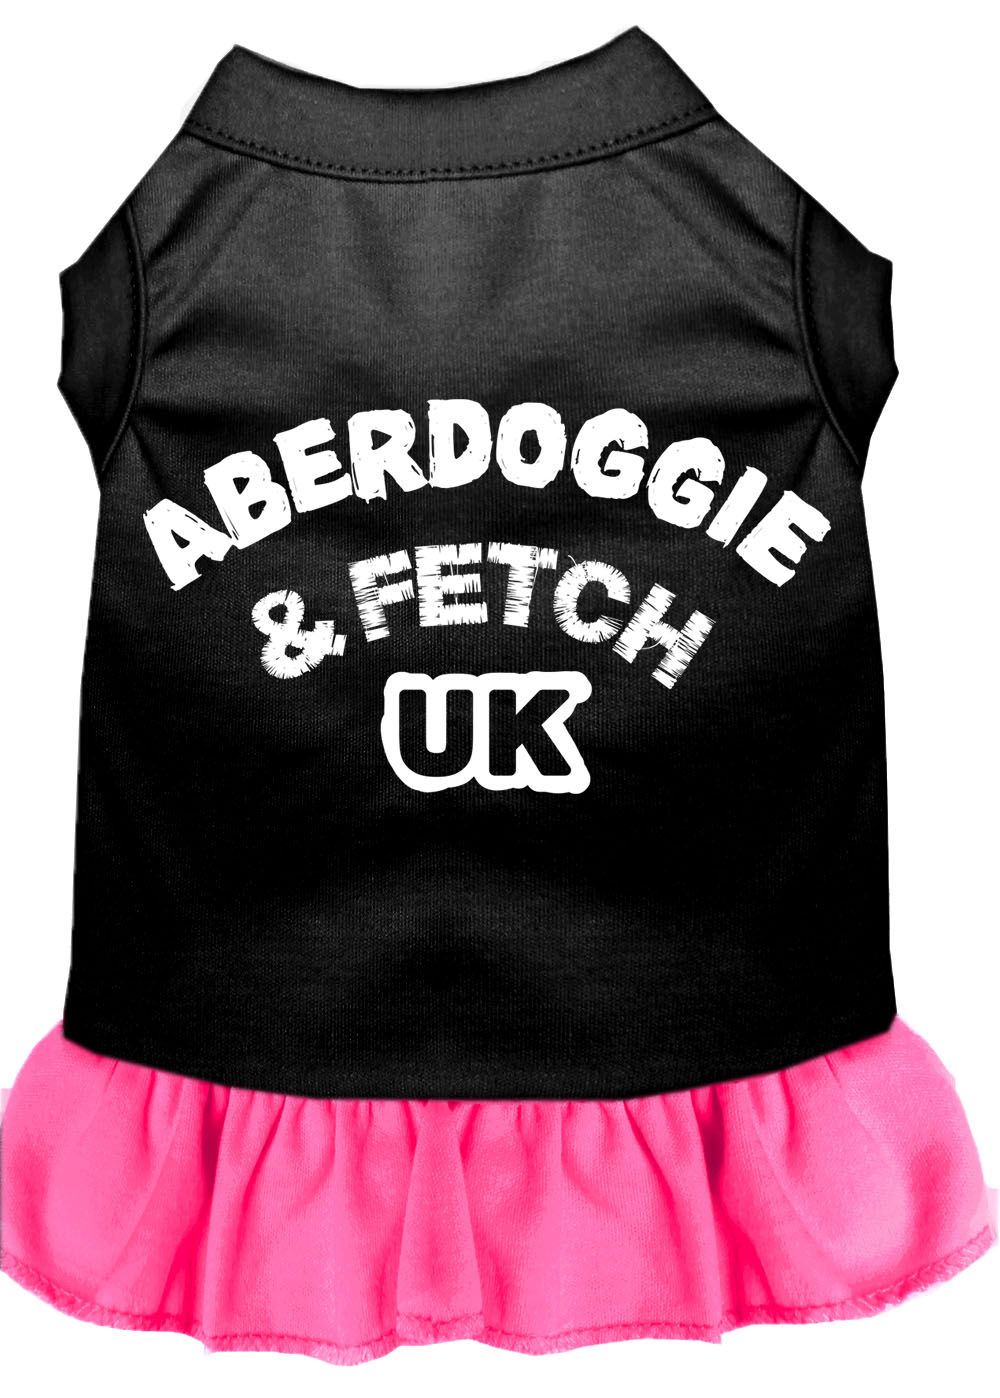 Aberdoggie Uk Screen Print Dress Black With Bright Pink Xl GreatEagleInc